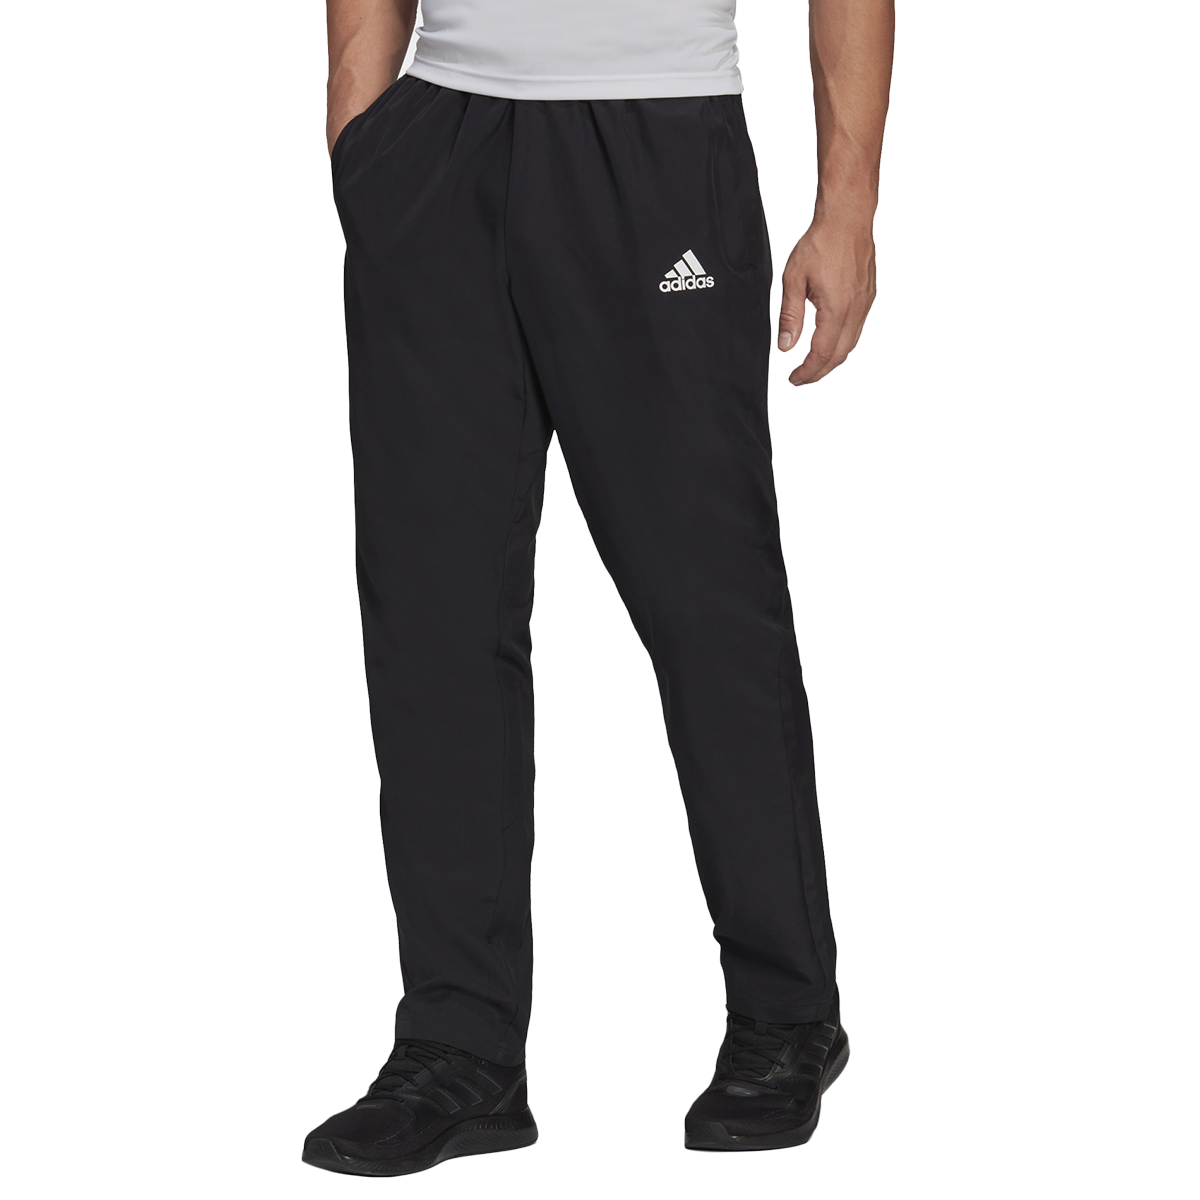 adidas Men's Standard Winter Badge of Sport Pants, Black/Cream White, XL :  Amazon.in: Clothing & Accessories